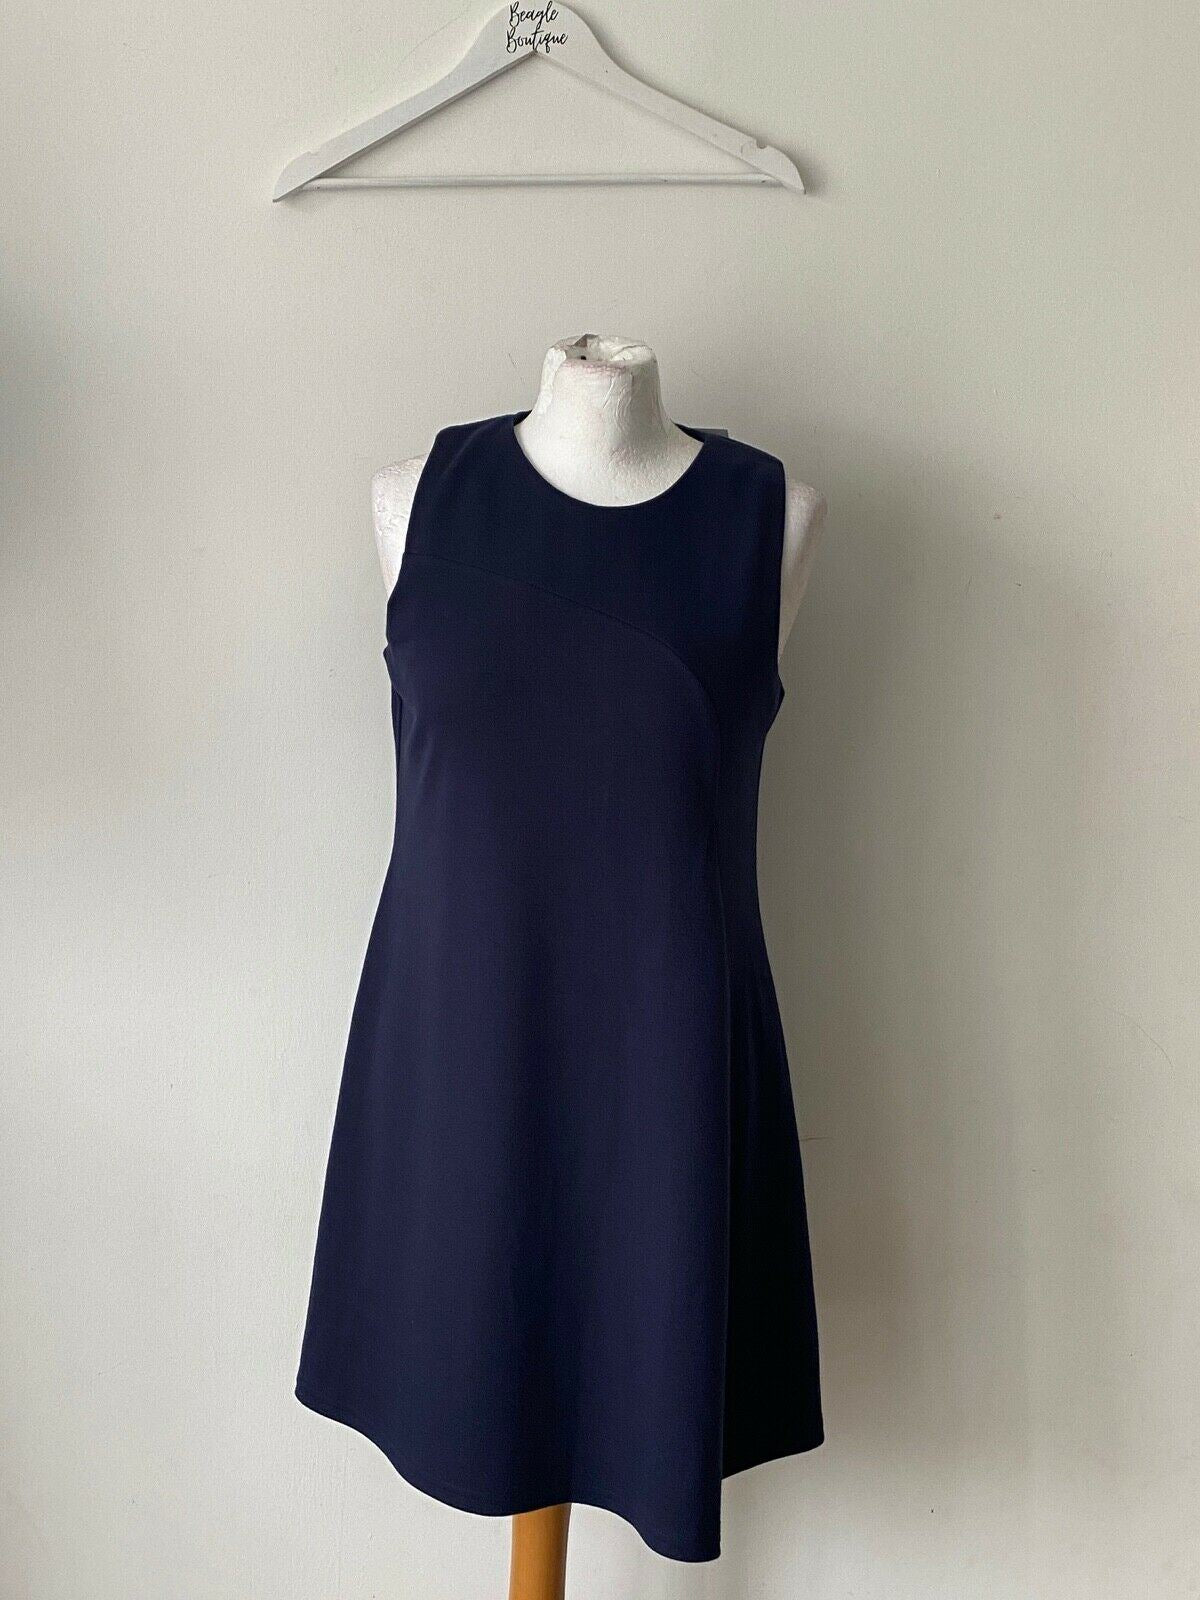 New Look Dark blue Sleeveless Shift Dress Size 12 Ponte Swing Shift